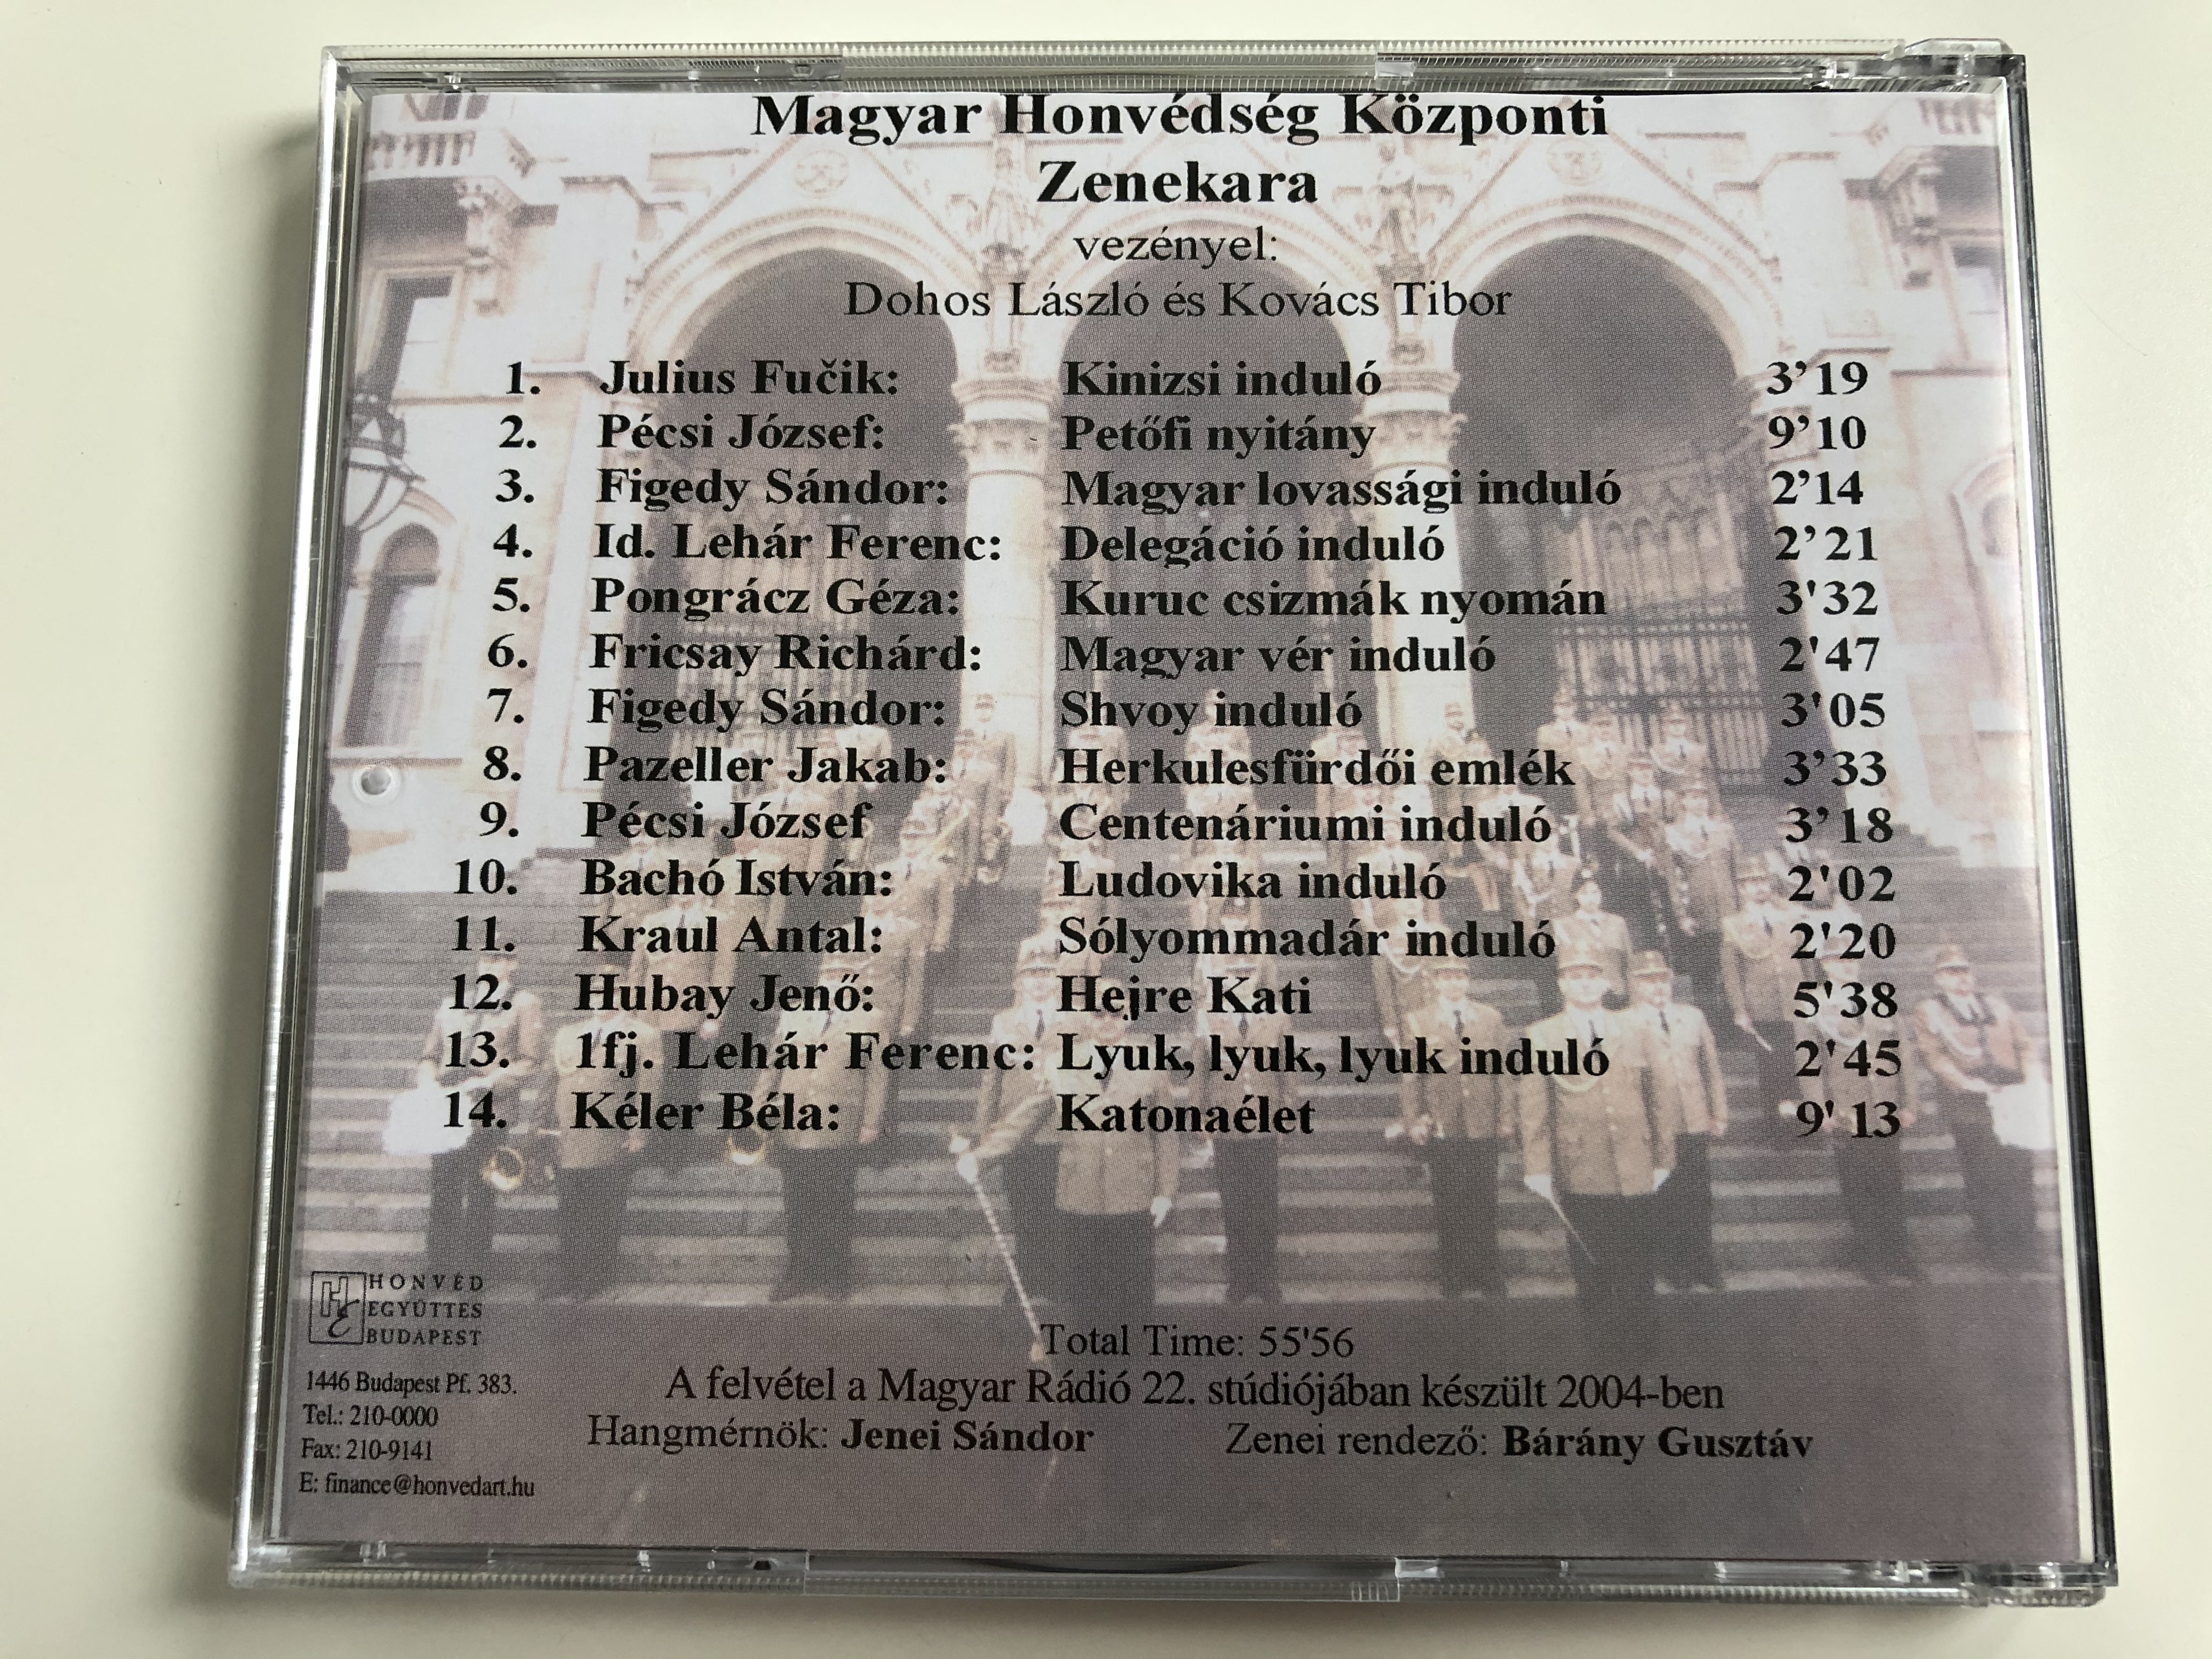 magyar-honv-ds-g-k-zponti-zenekara-centar-orchestra-of-the-hungarian-army-t-rzene-promenade-concert-dohos-l-szl-kov-cs-tibor-yellow-records-audio-cd-2004-yrcd-2004-01-7-.jpg